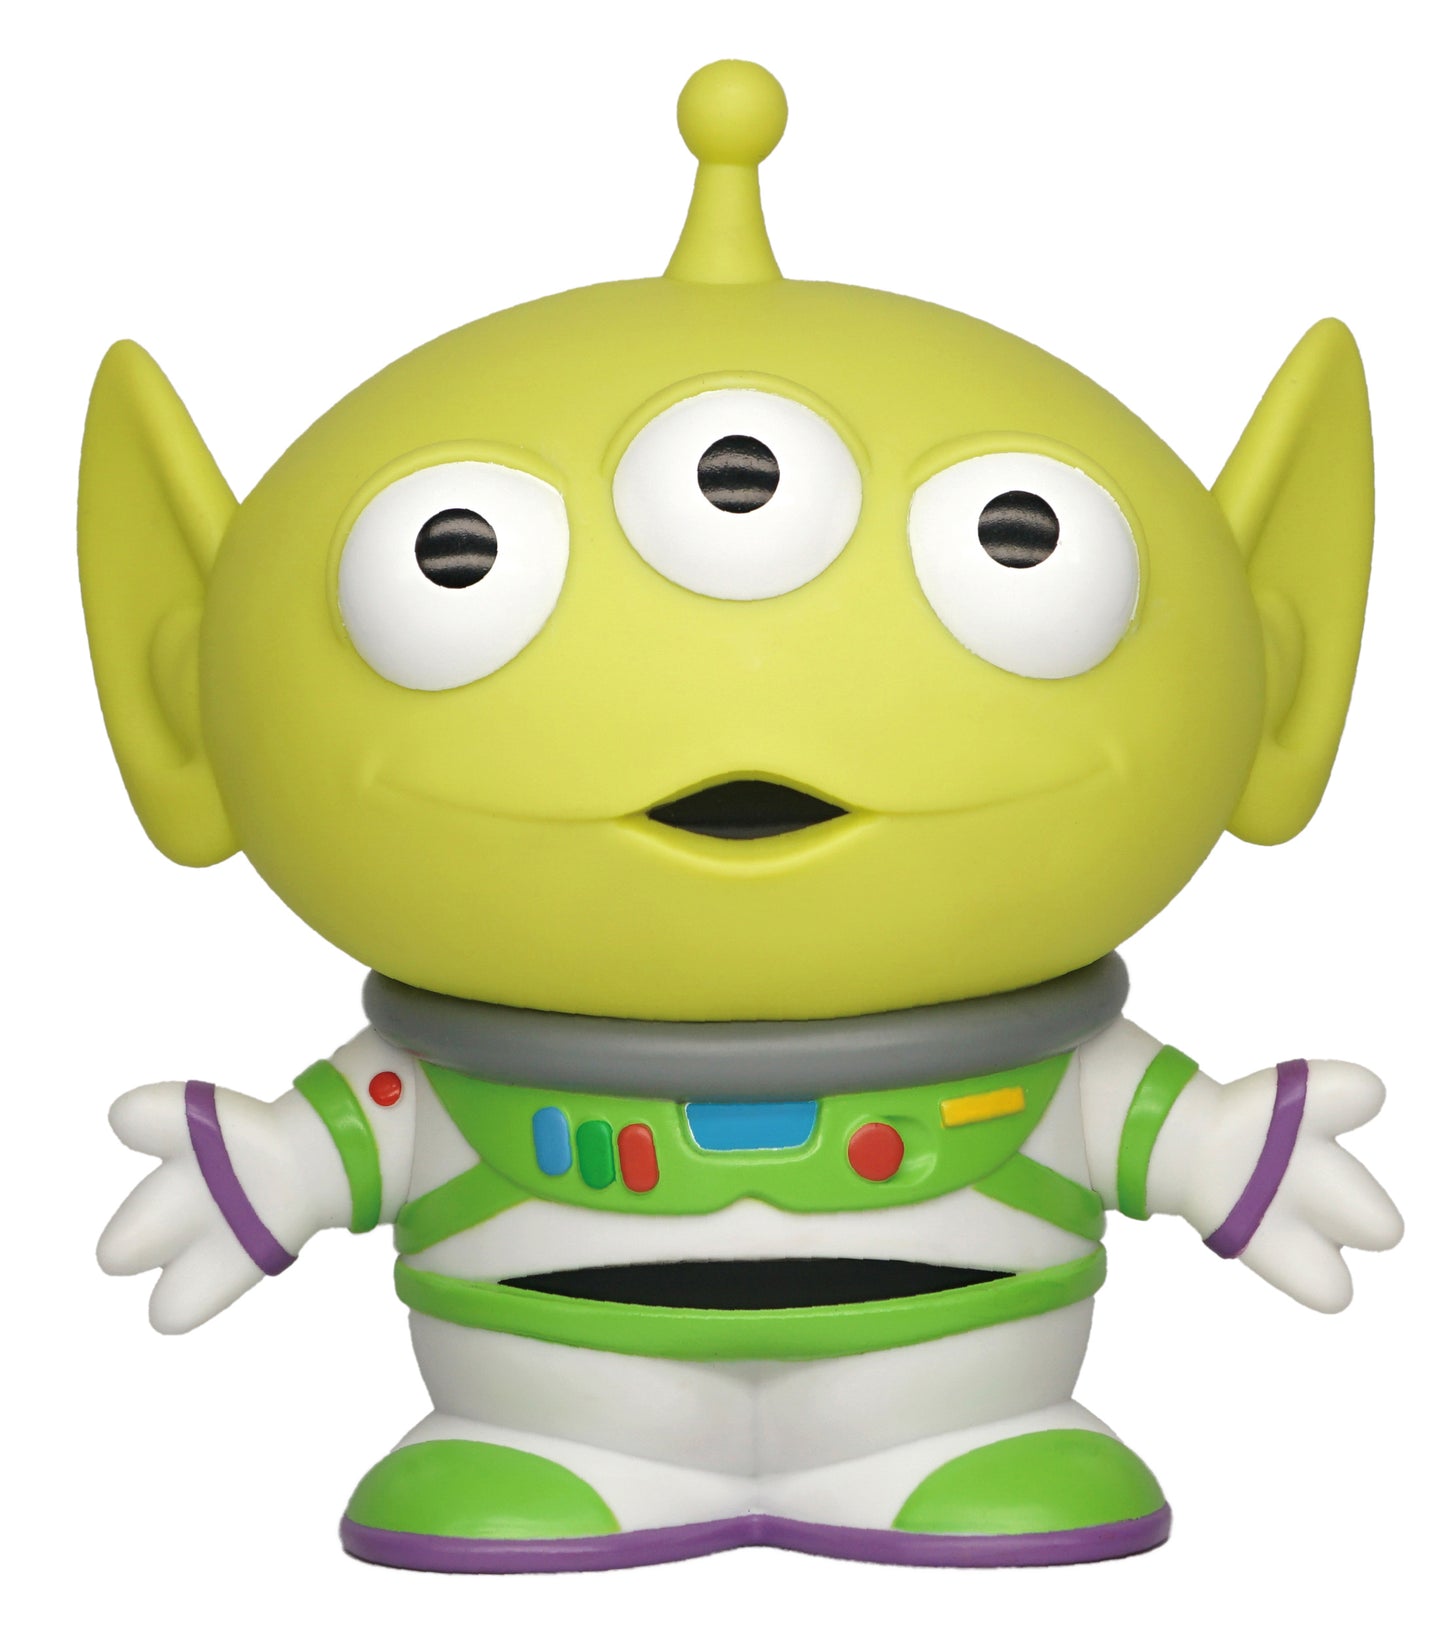 Toy Story Alien dressed up as Buzz Lightyear Figure Bank 8"